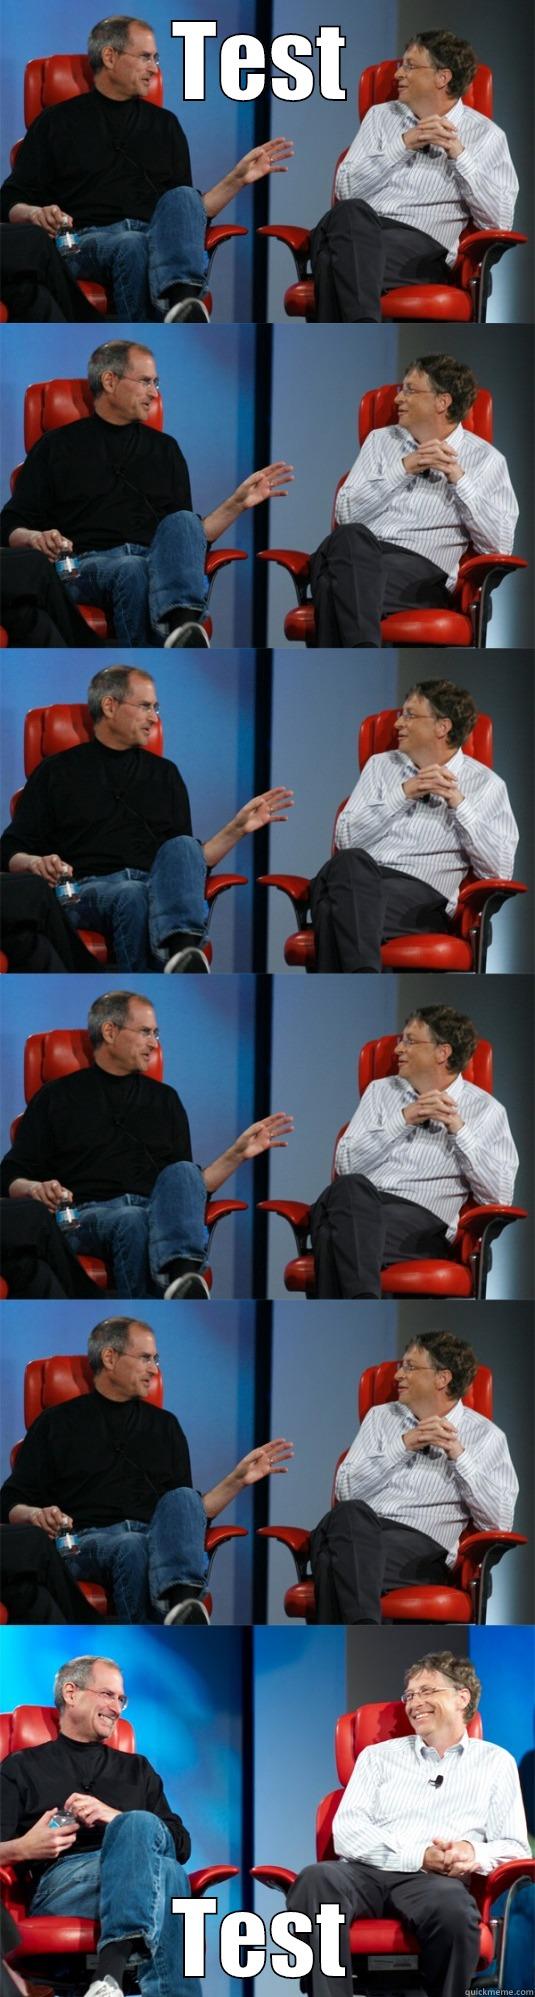 Test ha ha test igen varför? - TEST TEST Steve Jobs vs Bill Gates